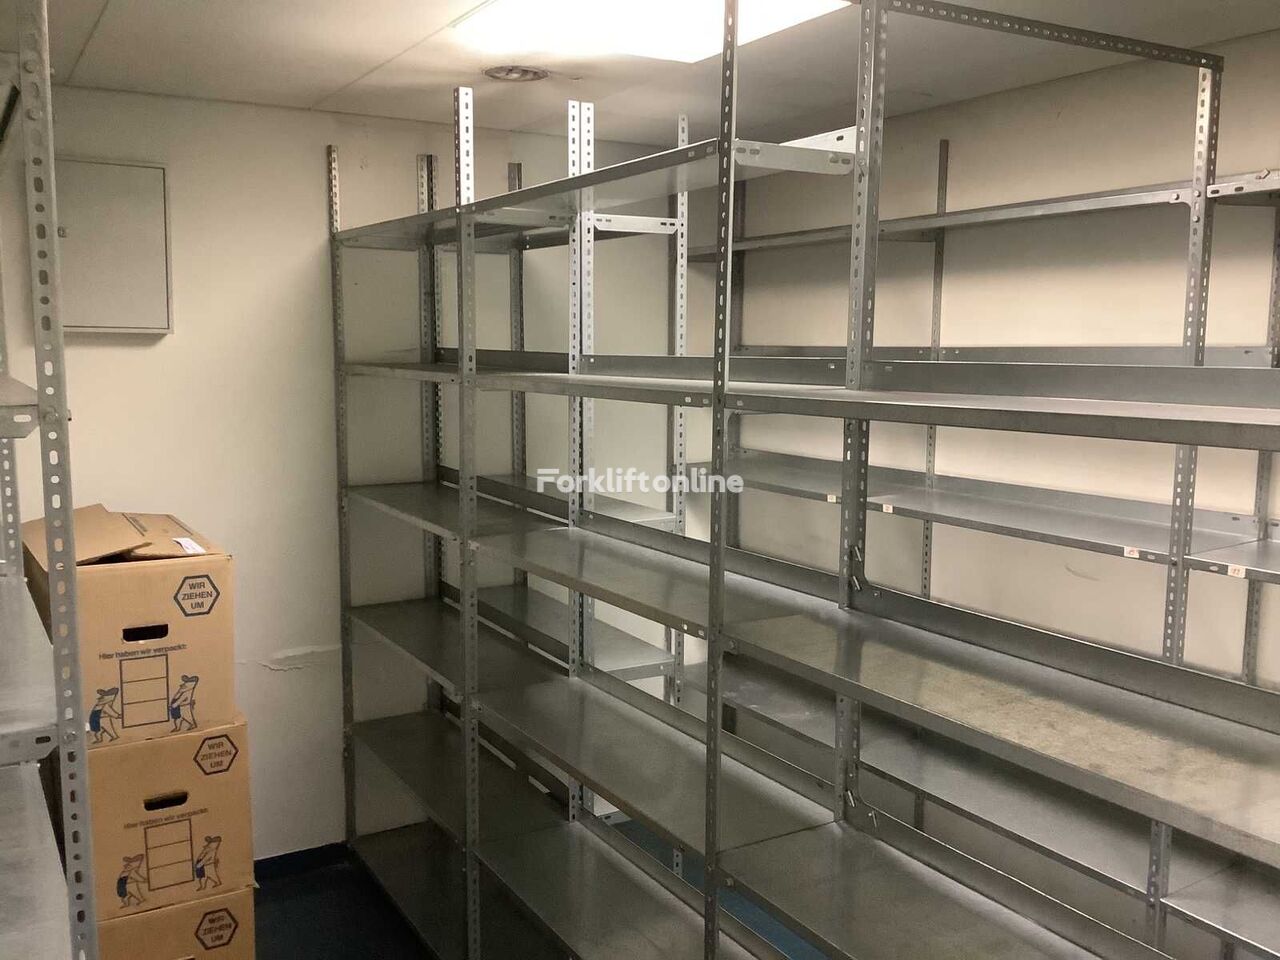 Room content: storage rack warehouse shelving